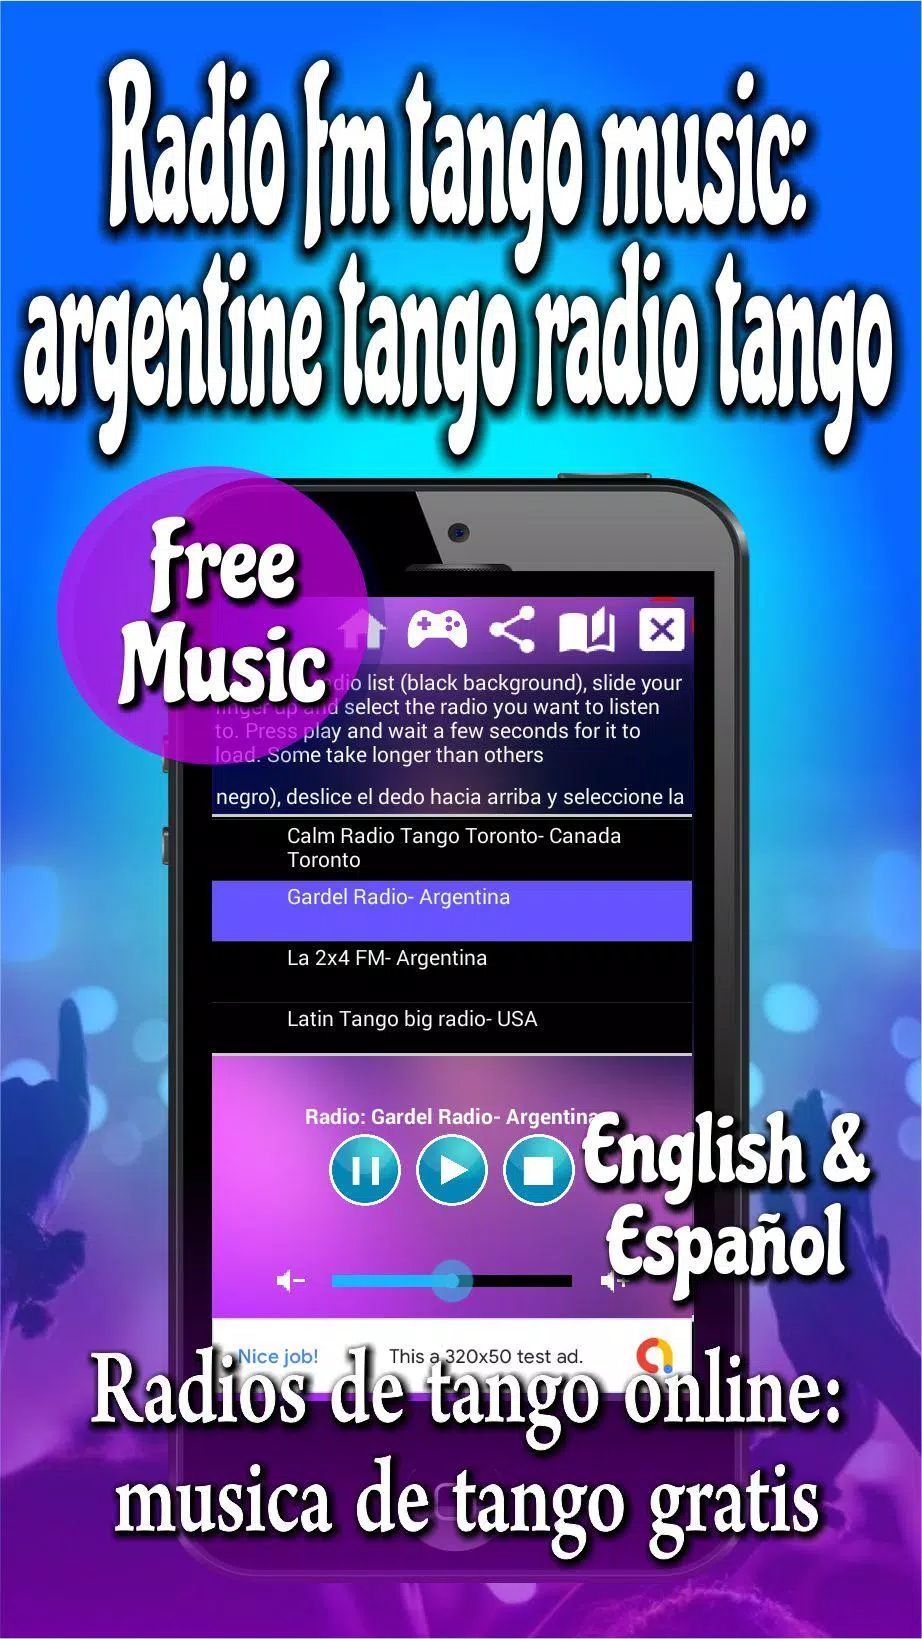 Radio fm tango music: argentine tango radio tango for Android - APK Download